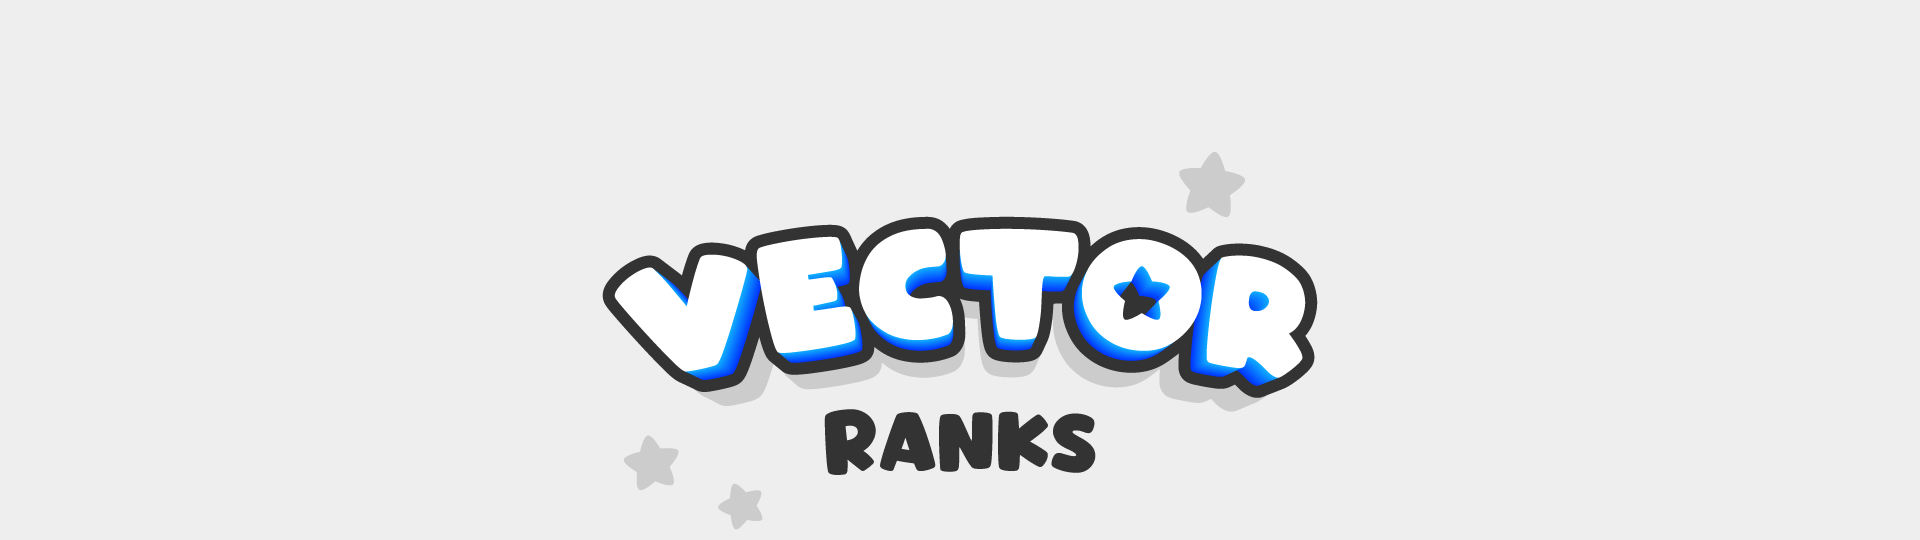 Vector Ranks Pack